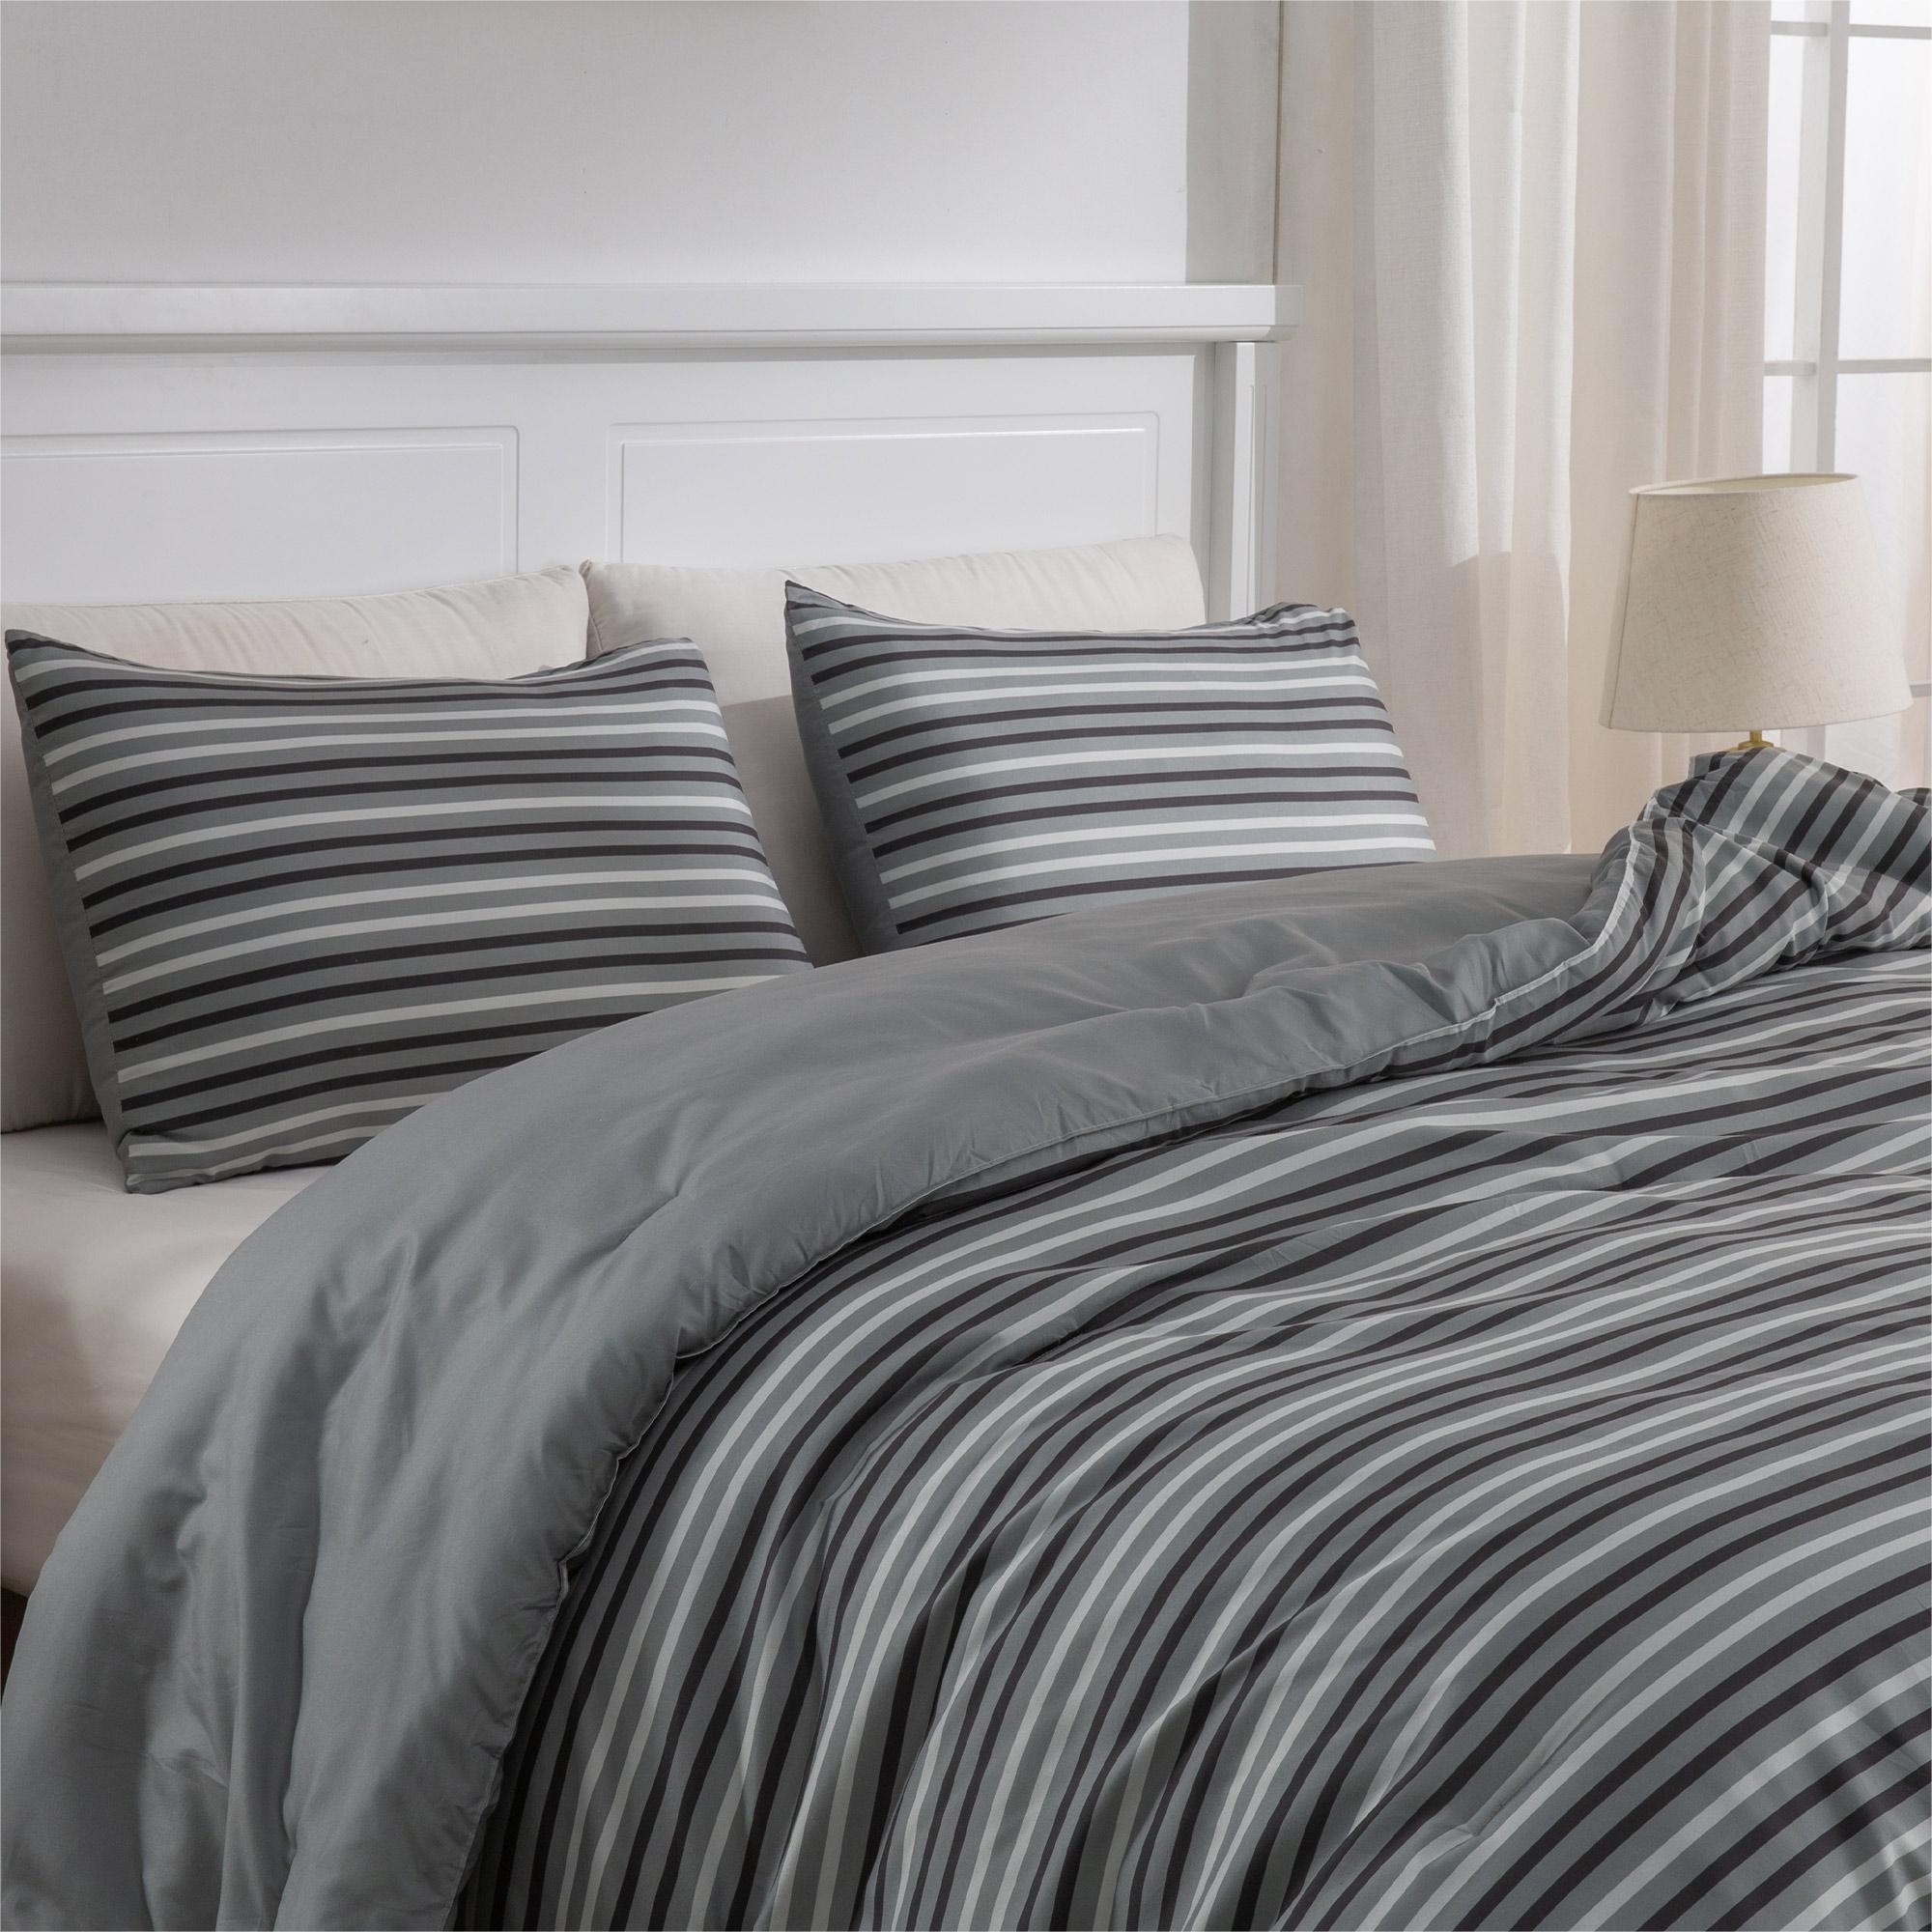 Ultra Soft Reversible Printed Stripe Microfiber Comforter Set - All-Season Warmth, Dark Grey - Full/Queen